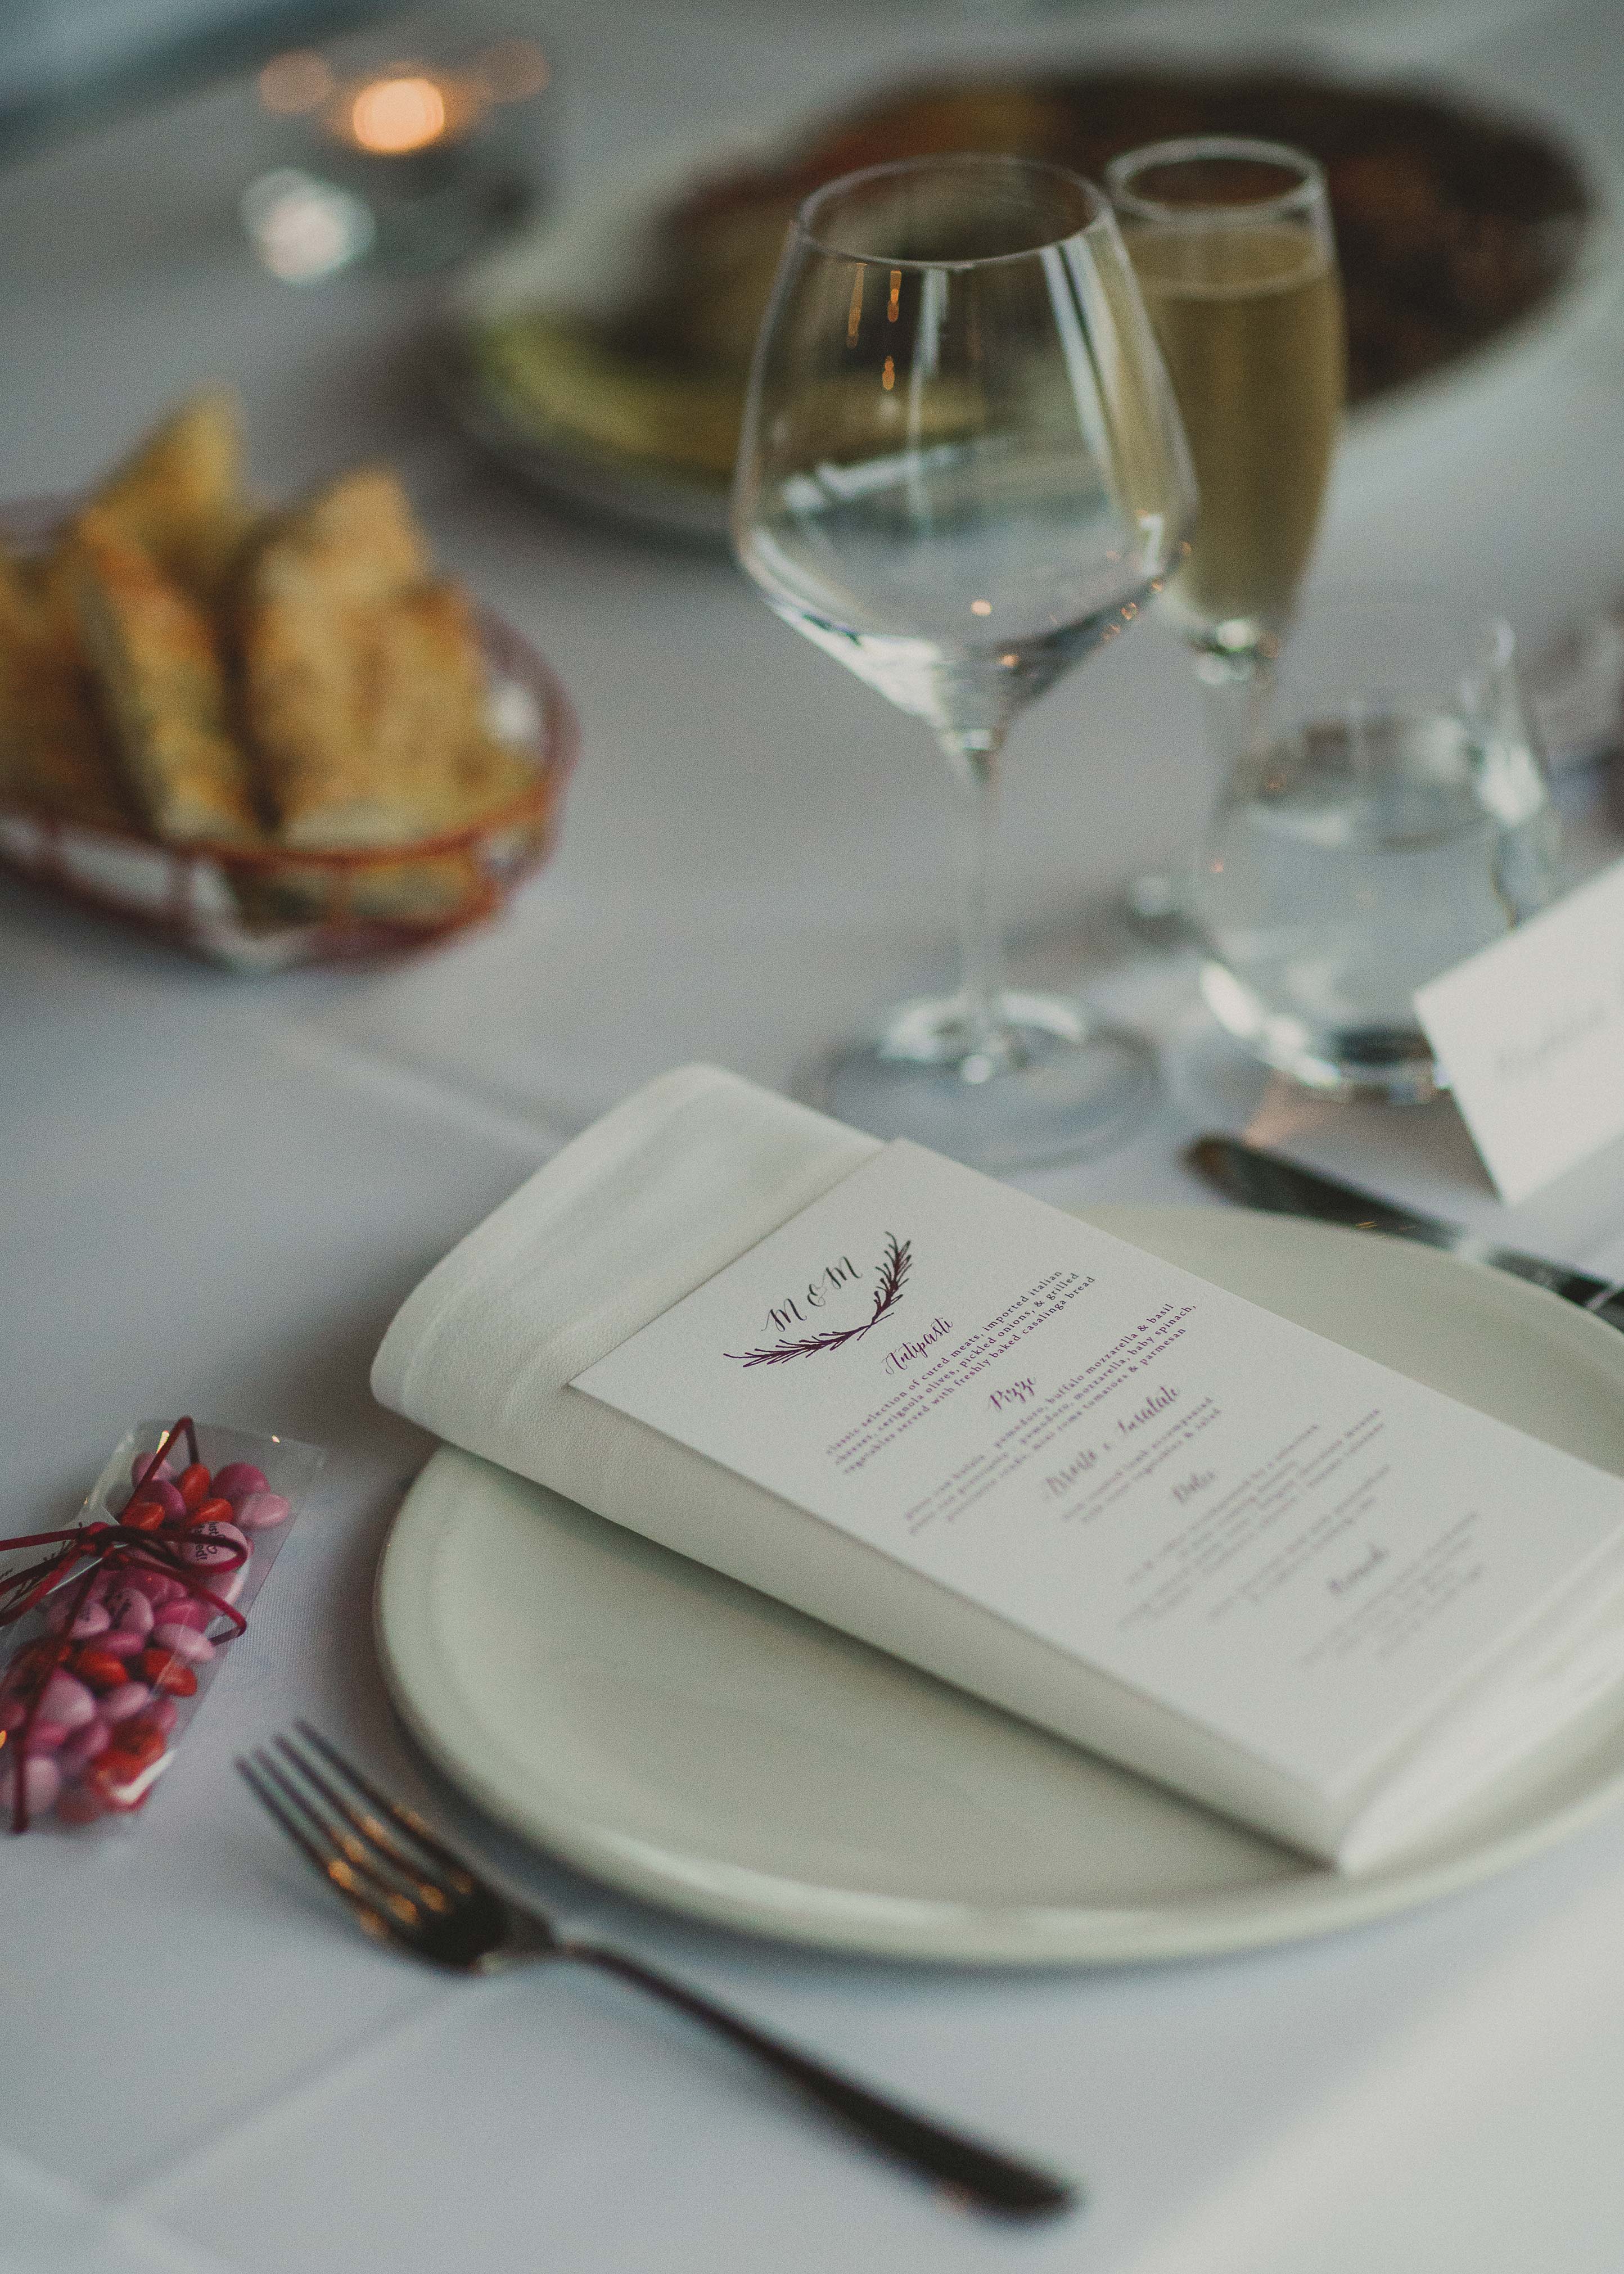 melbourne-yarra-zonzo-wedding-reception-table-setting